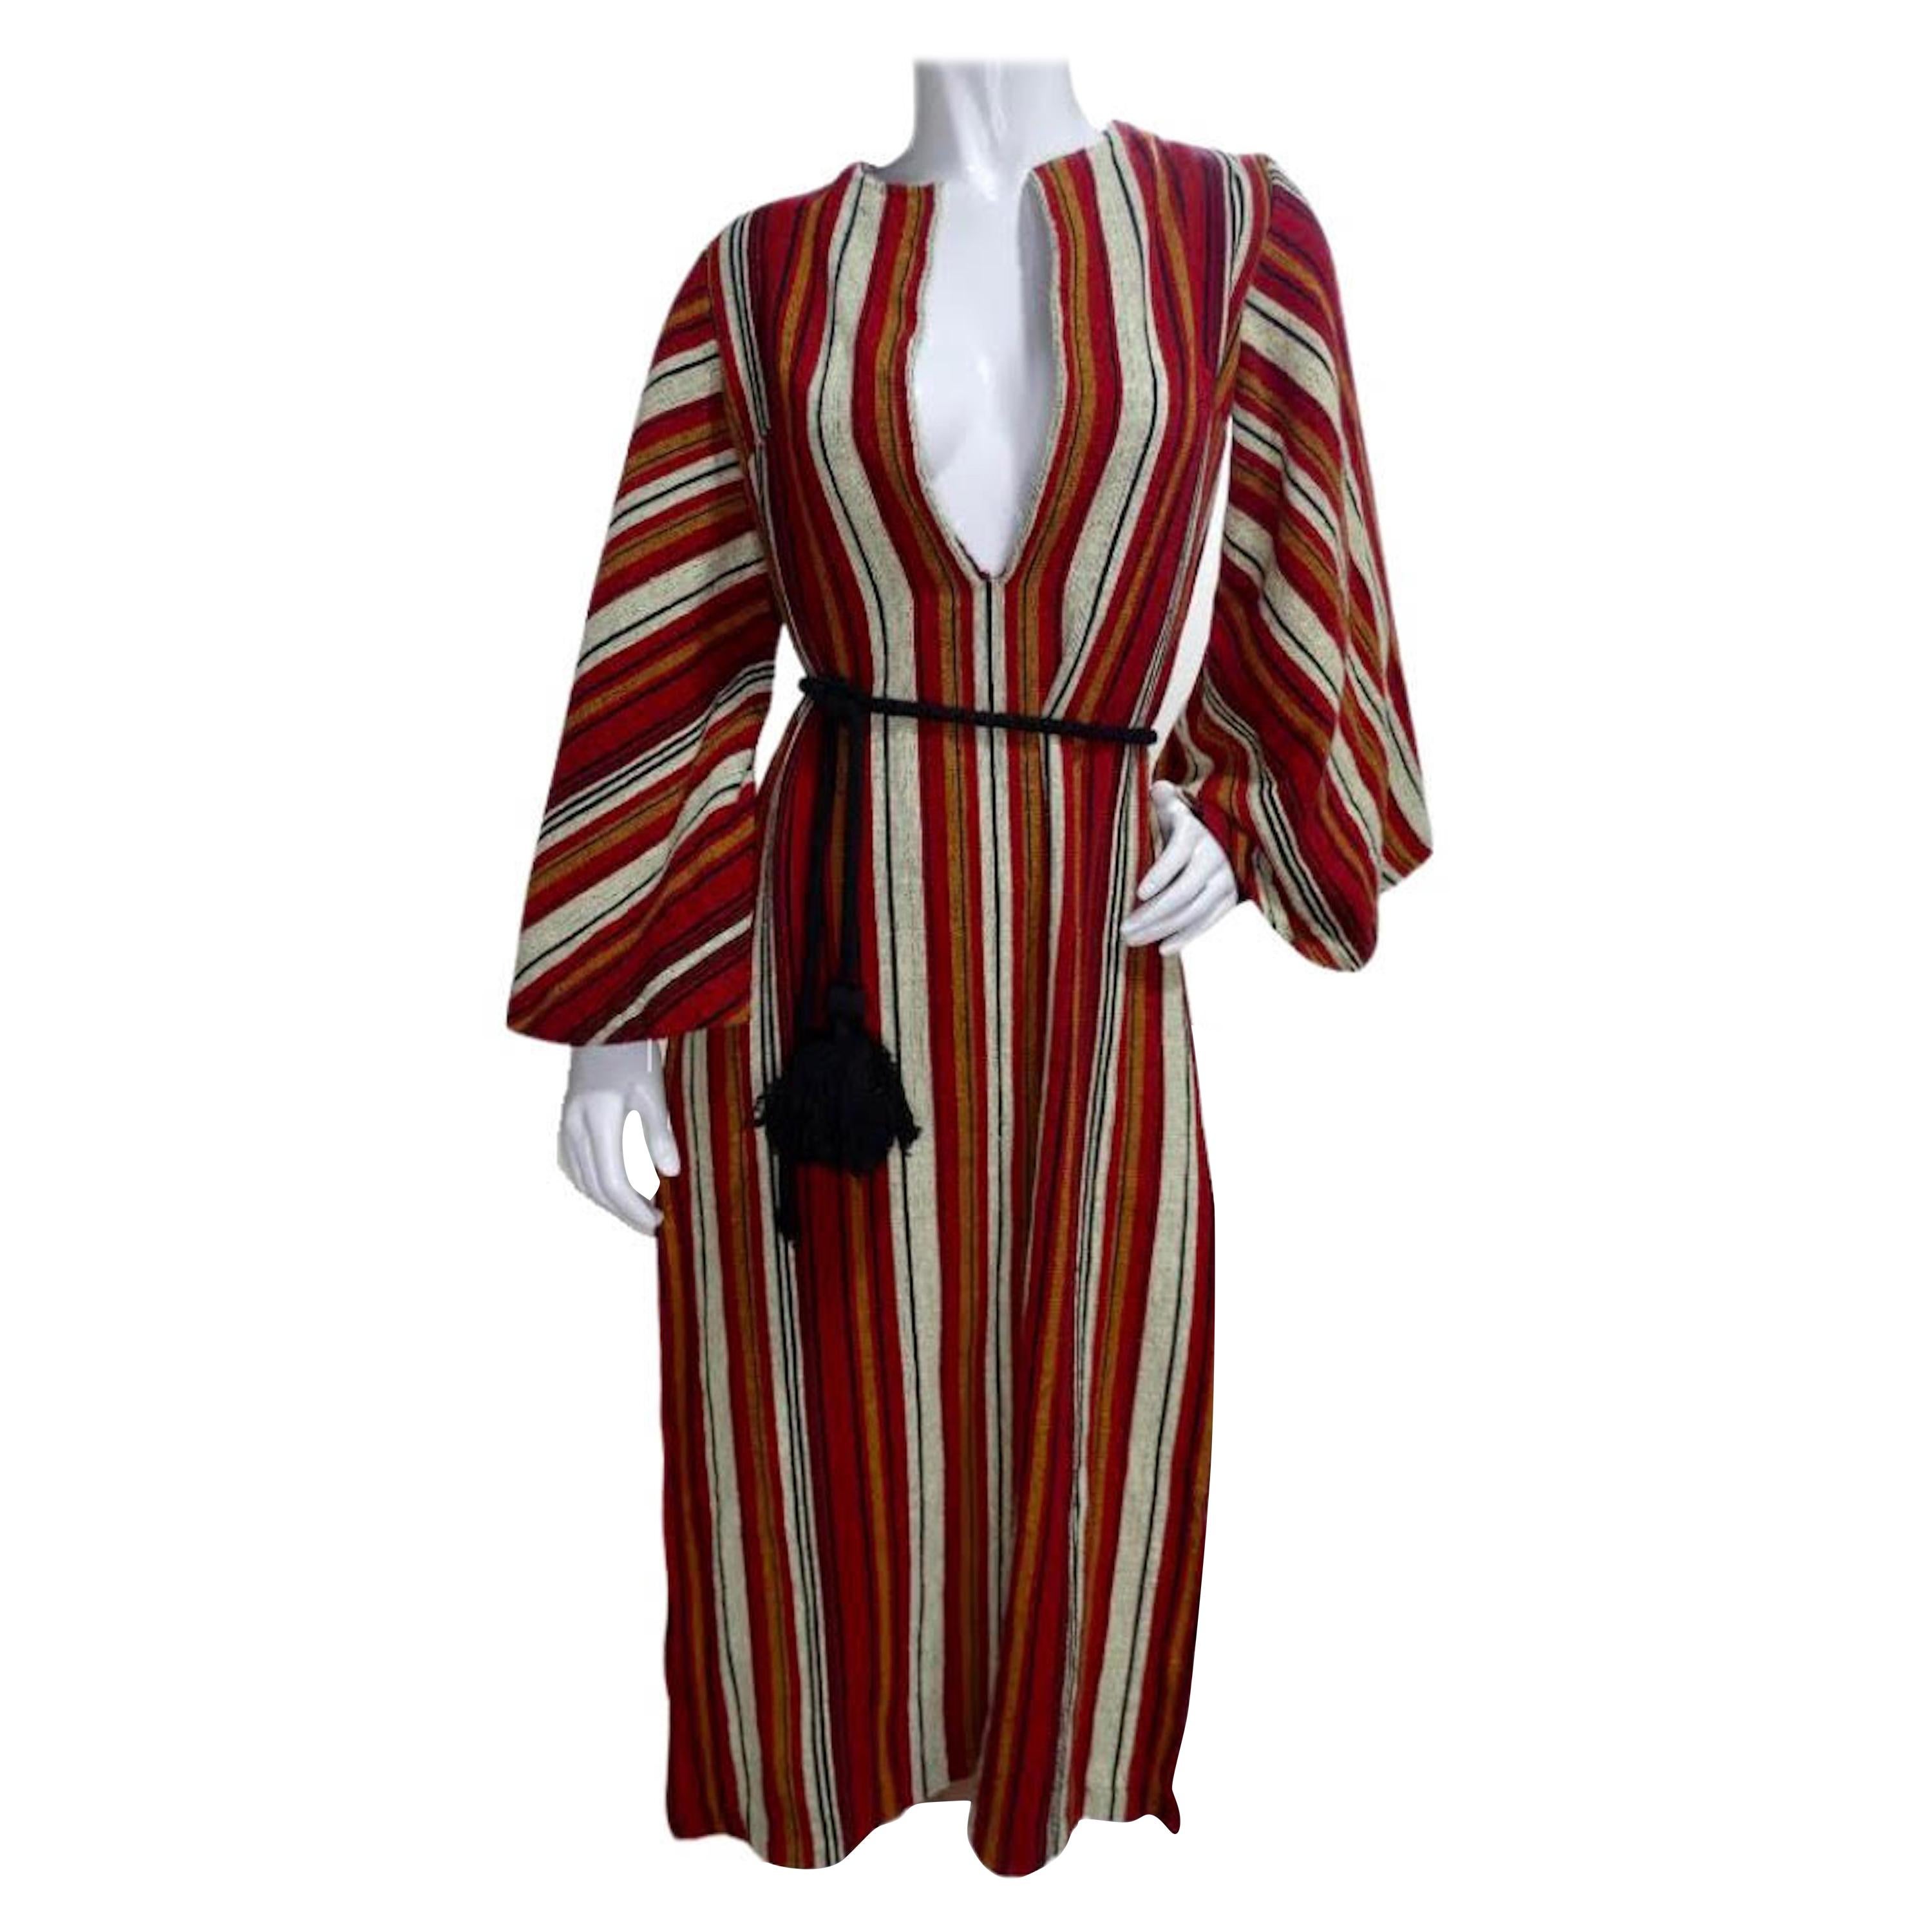 Rikma Angel Wing 1970s Striped Dress For Sale